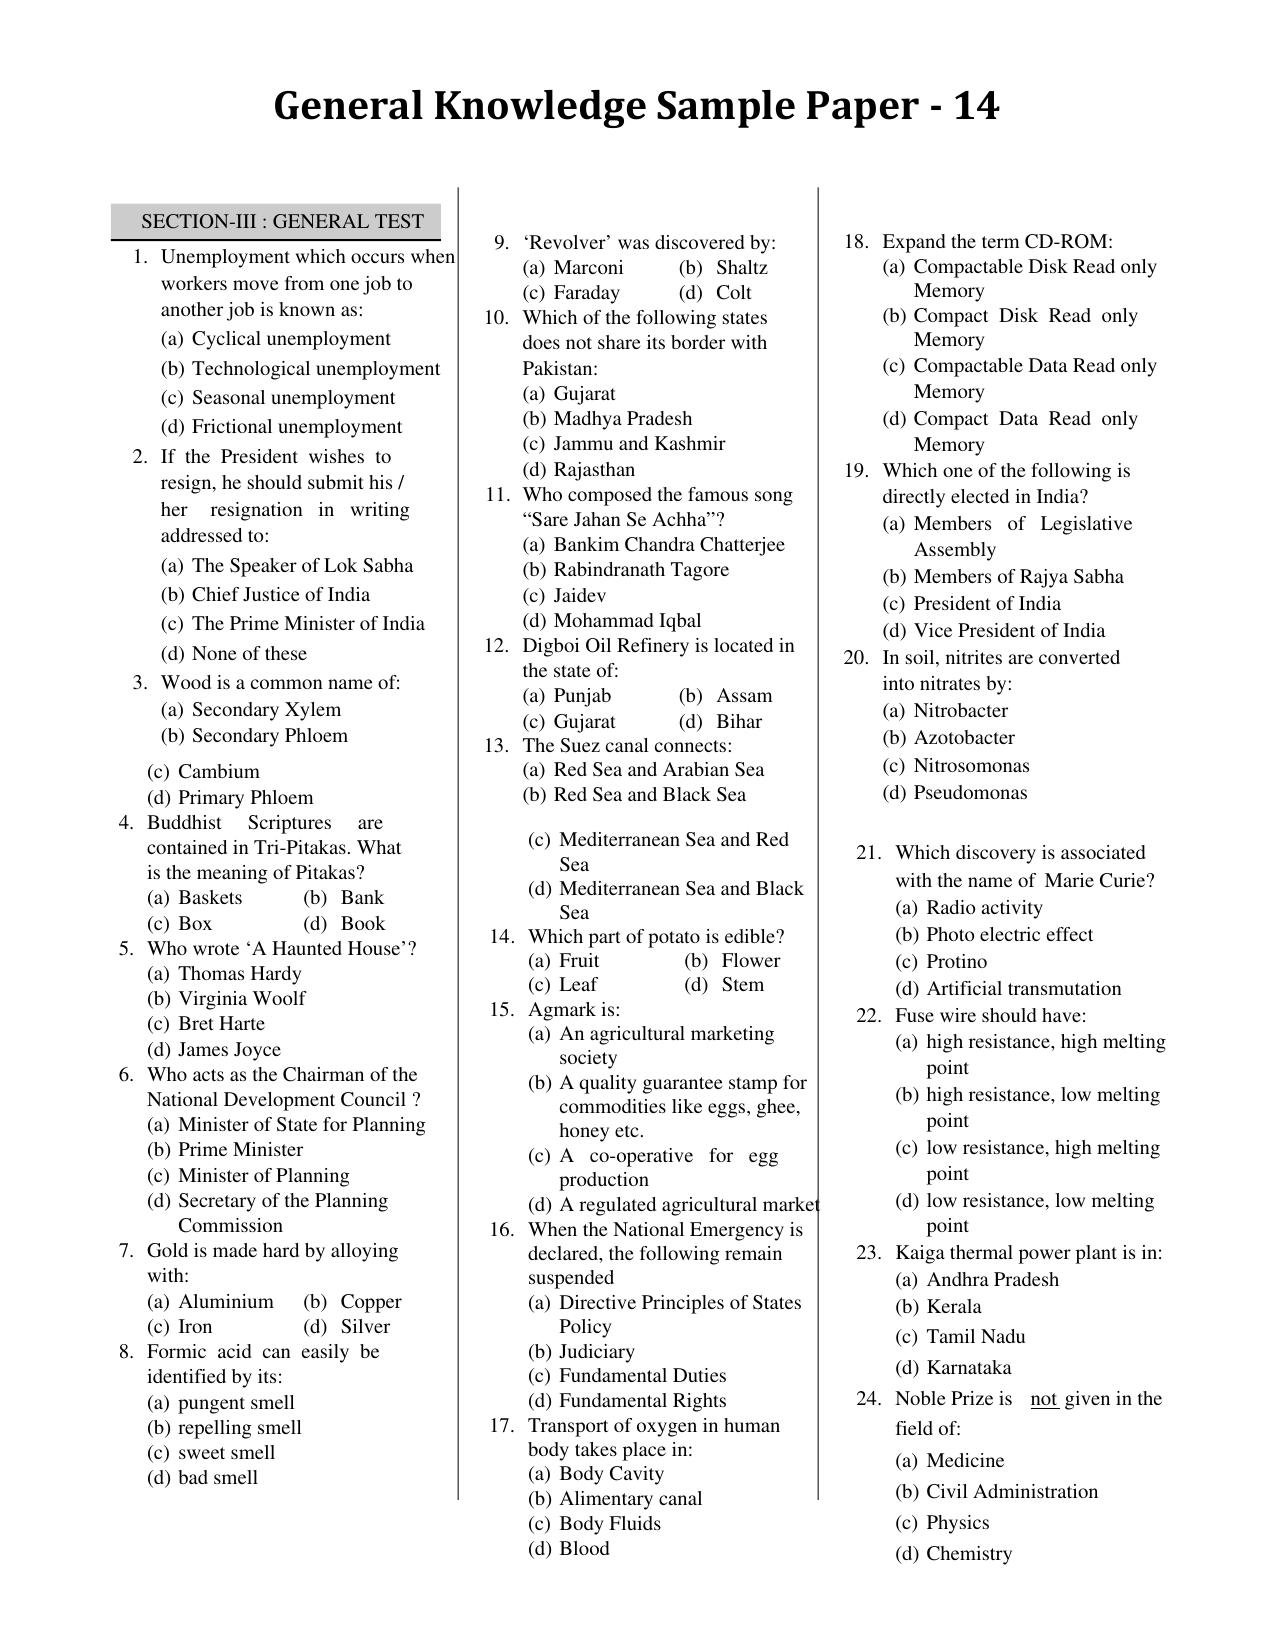 CUET General Knowledge Sample Paper 14 - Page 1